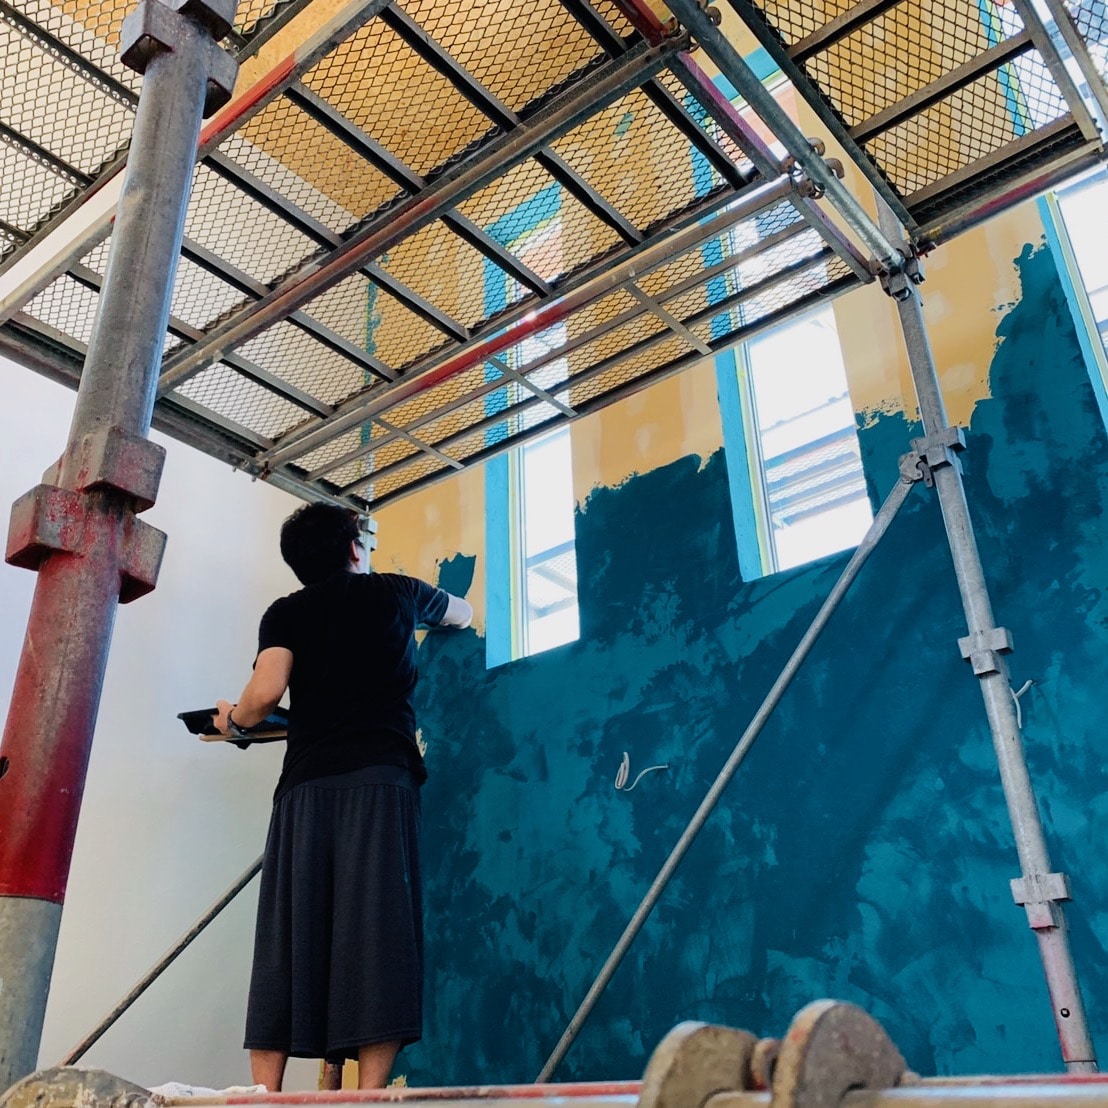 セール価格 珪藻土 壁 塗り壁 左官 壁材 塗料 DIY U-SELECT KEISOUDO PLASTER 5kg 